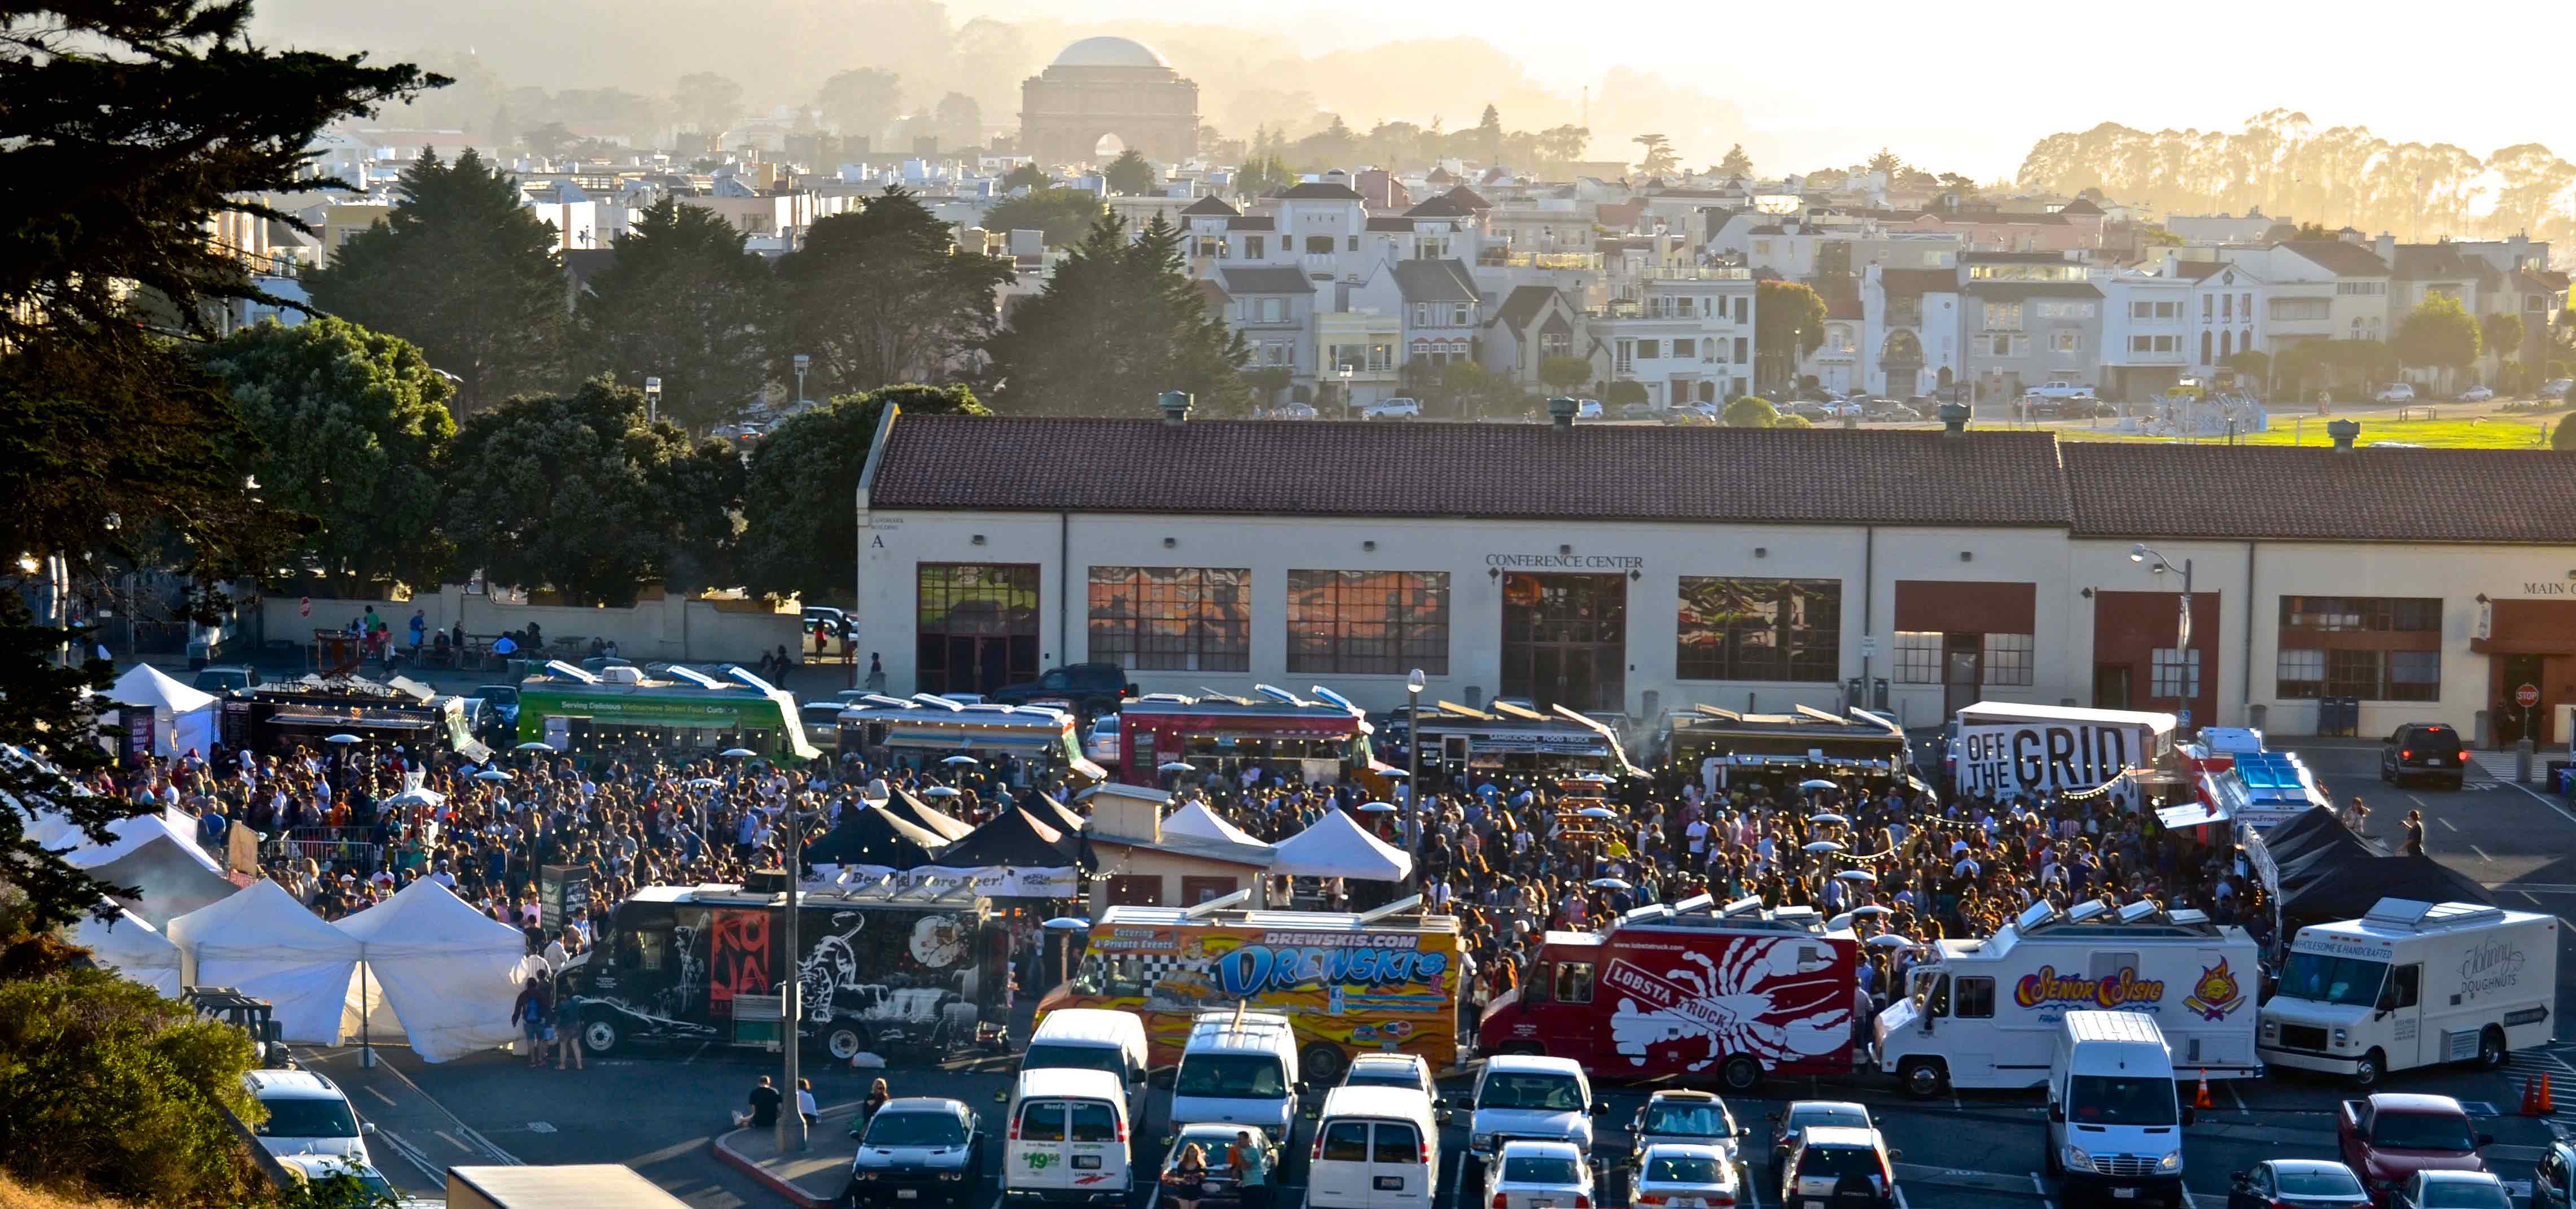 San Francisco's food trucks